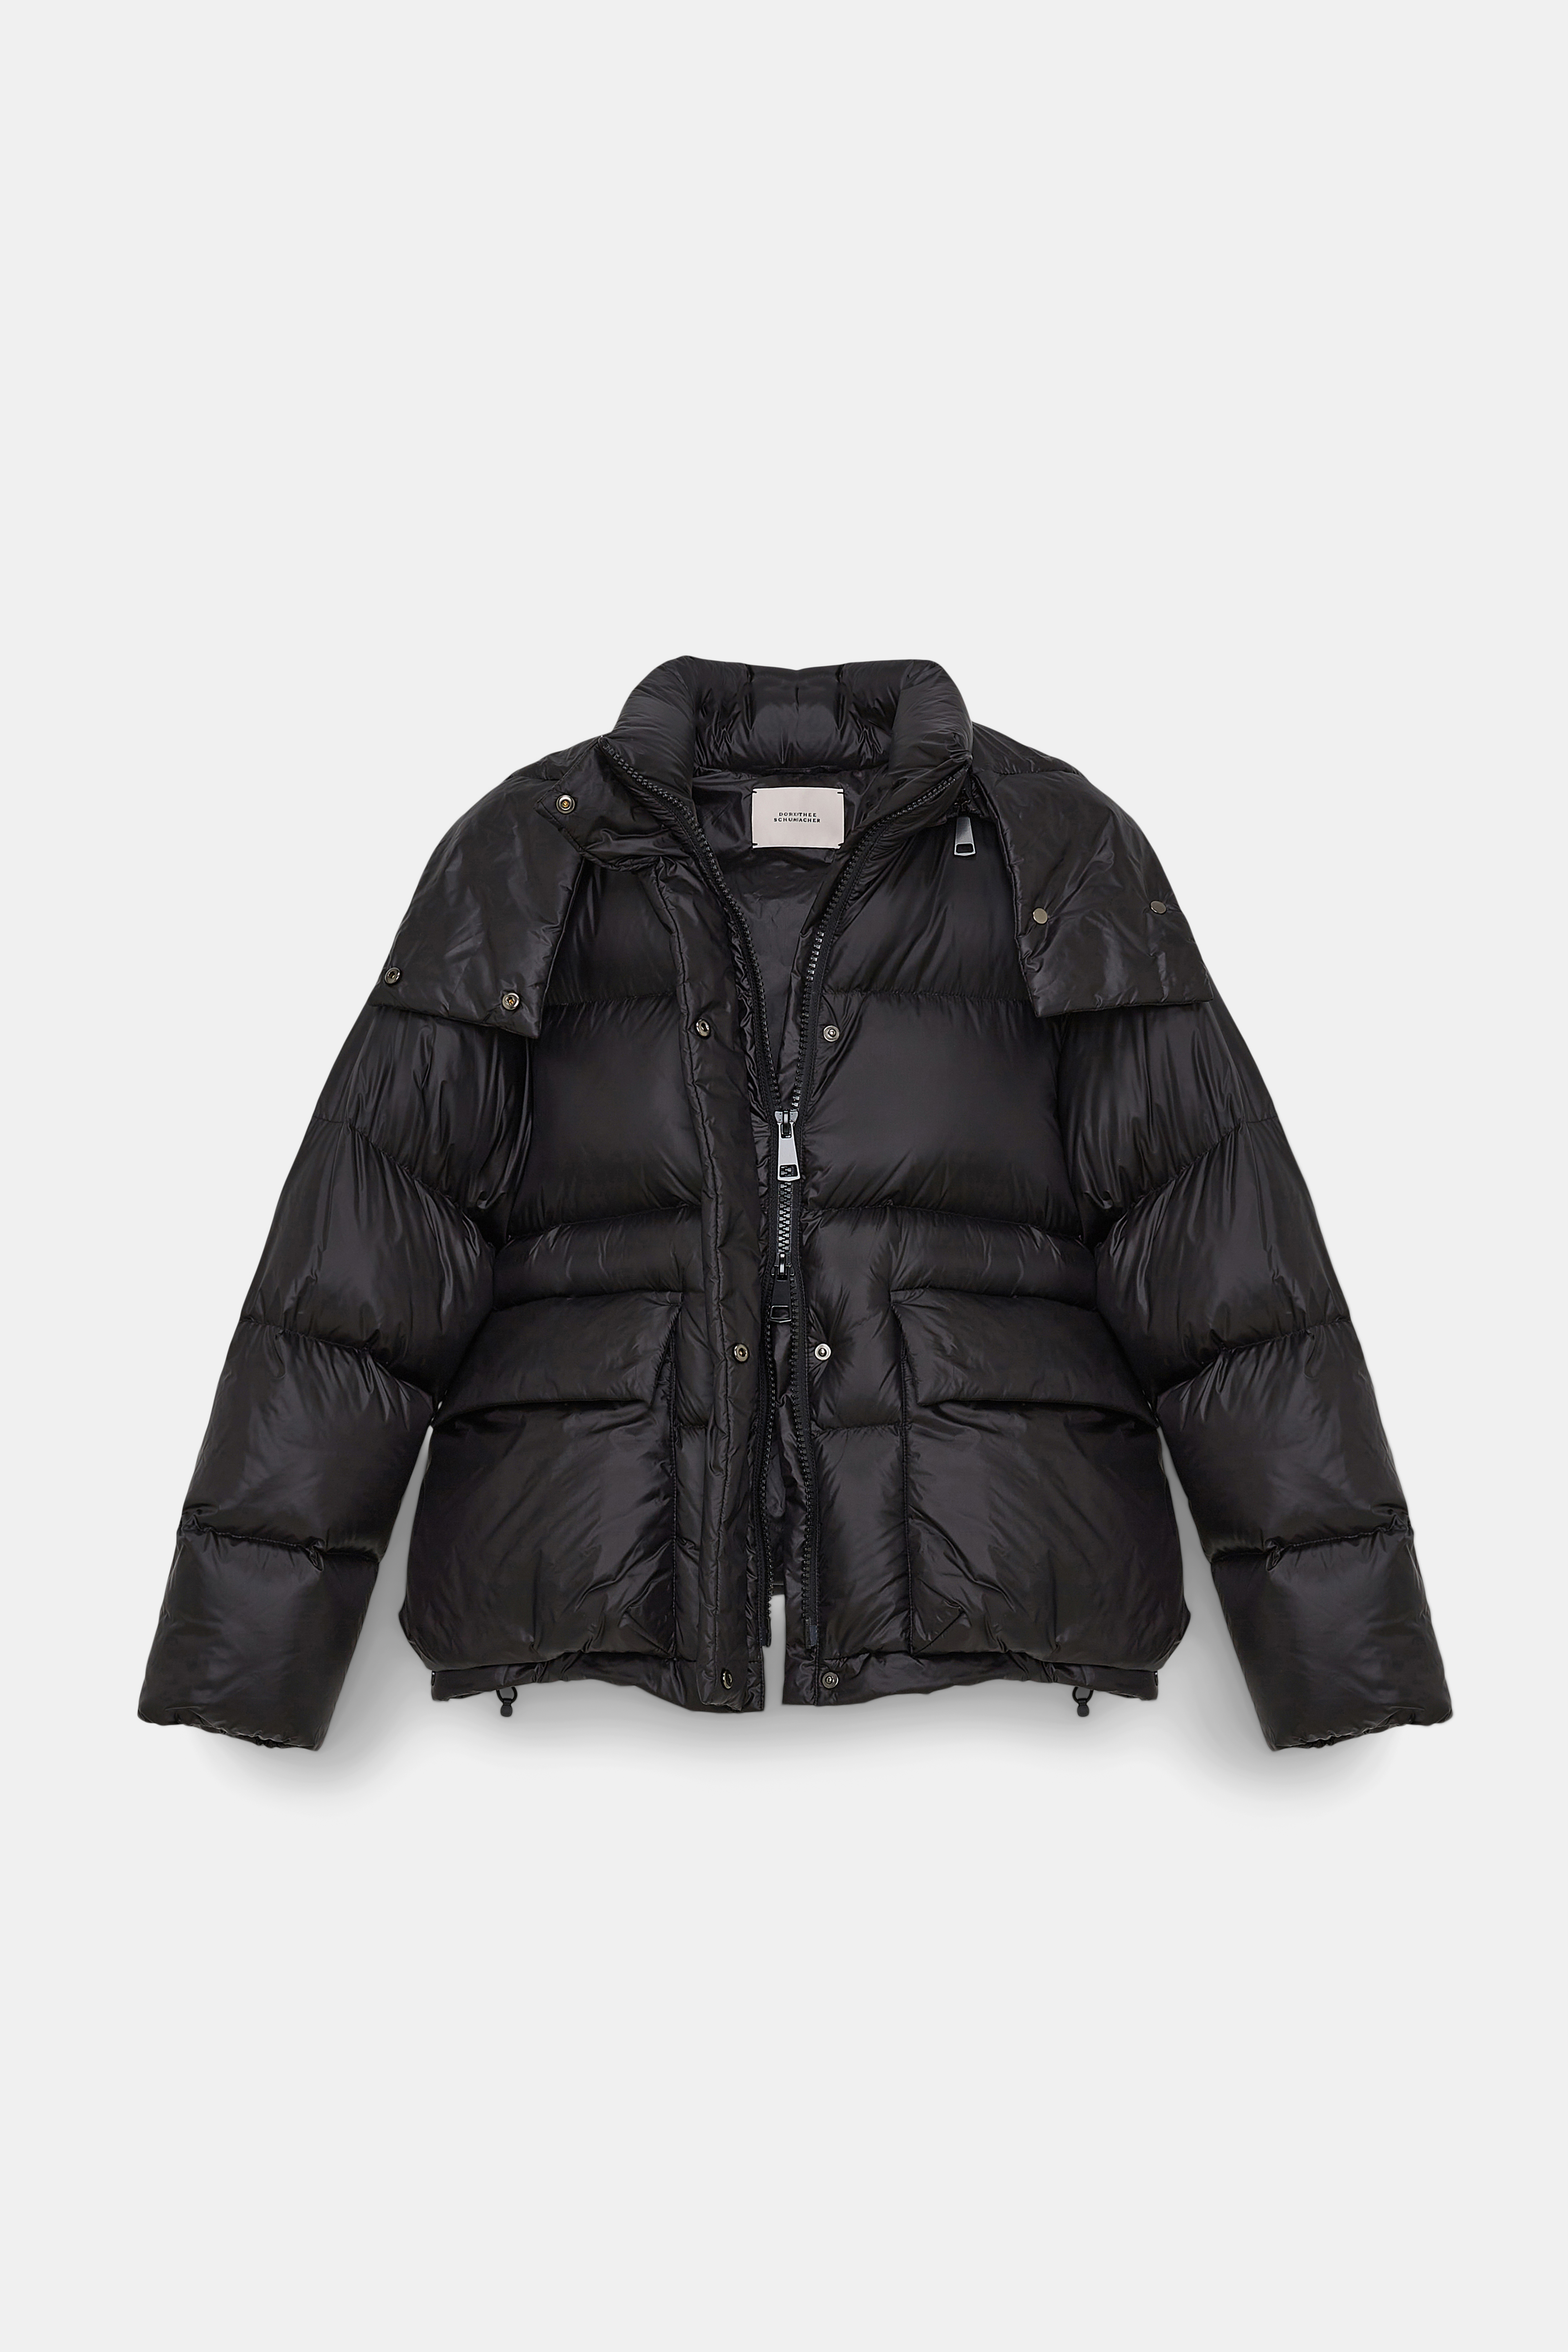 Jackets & Coats | DOROTHEE SCHUMACHER - Official Online Store